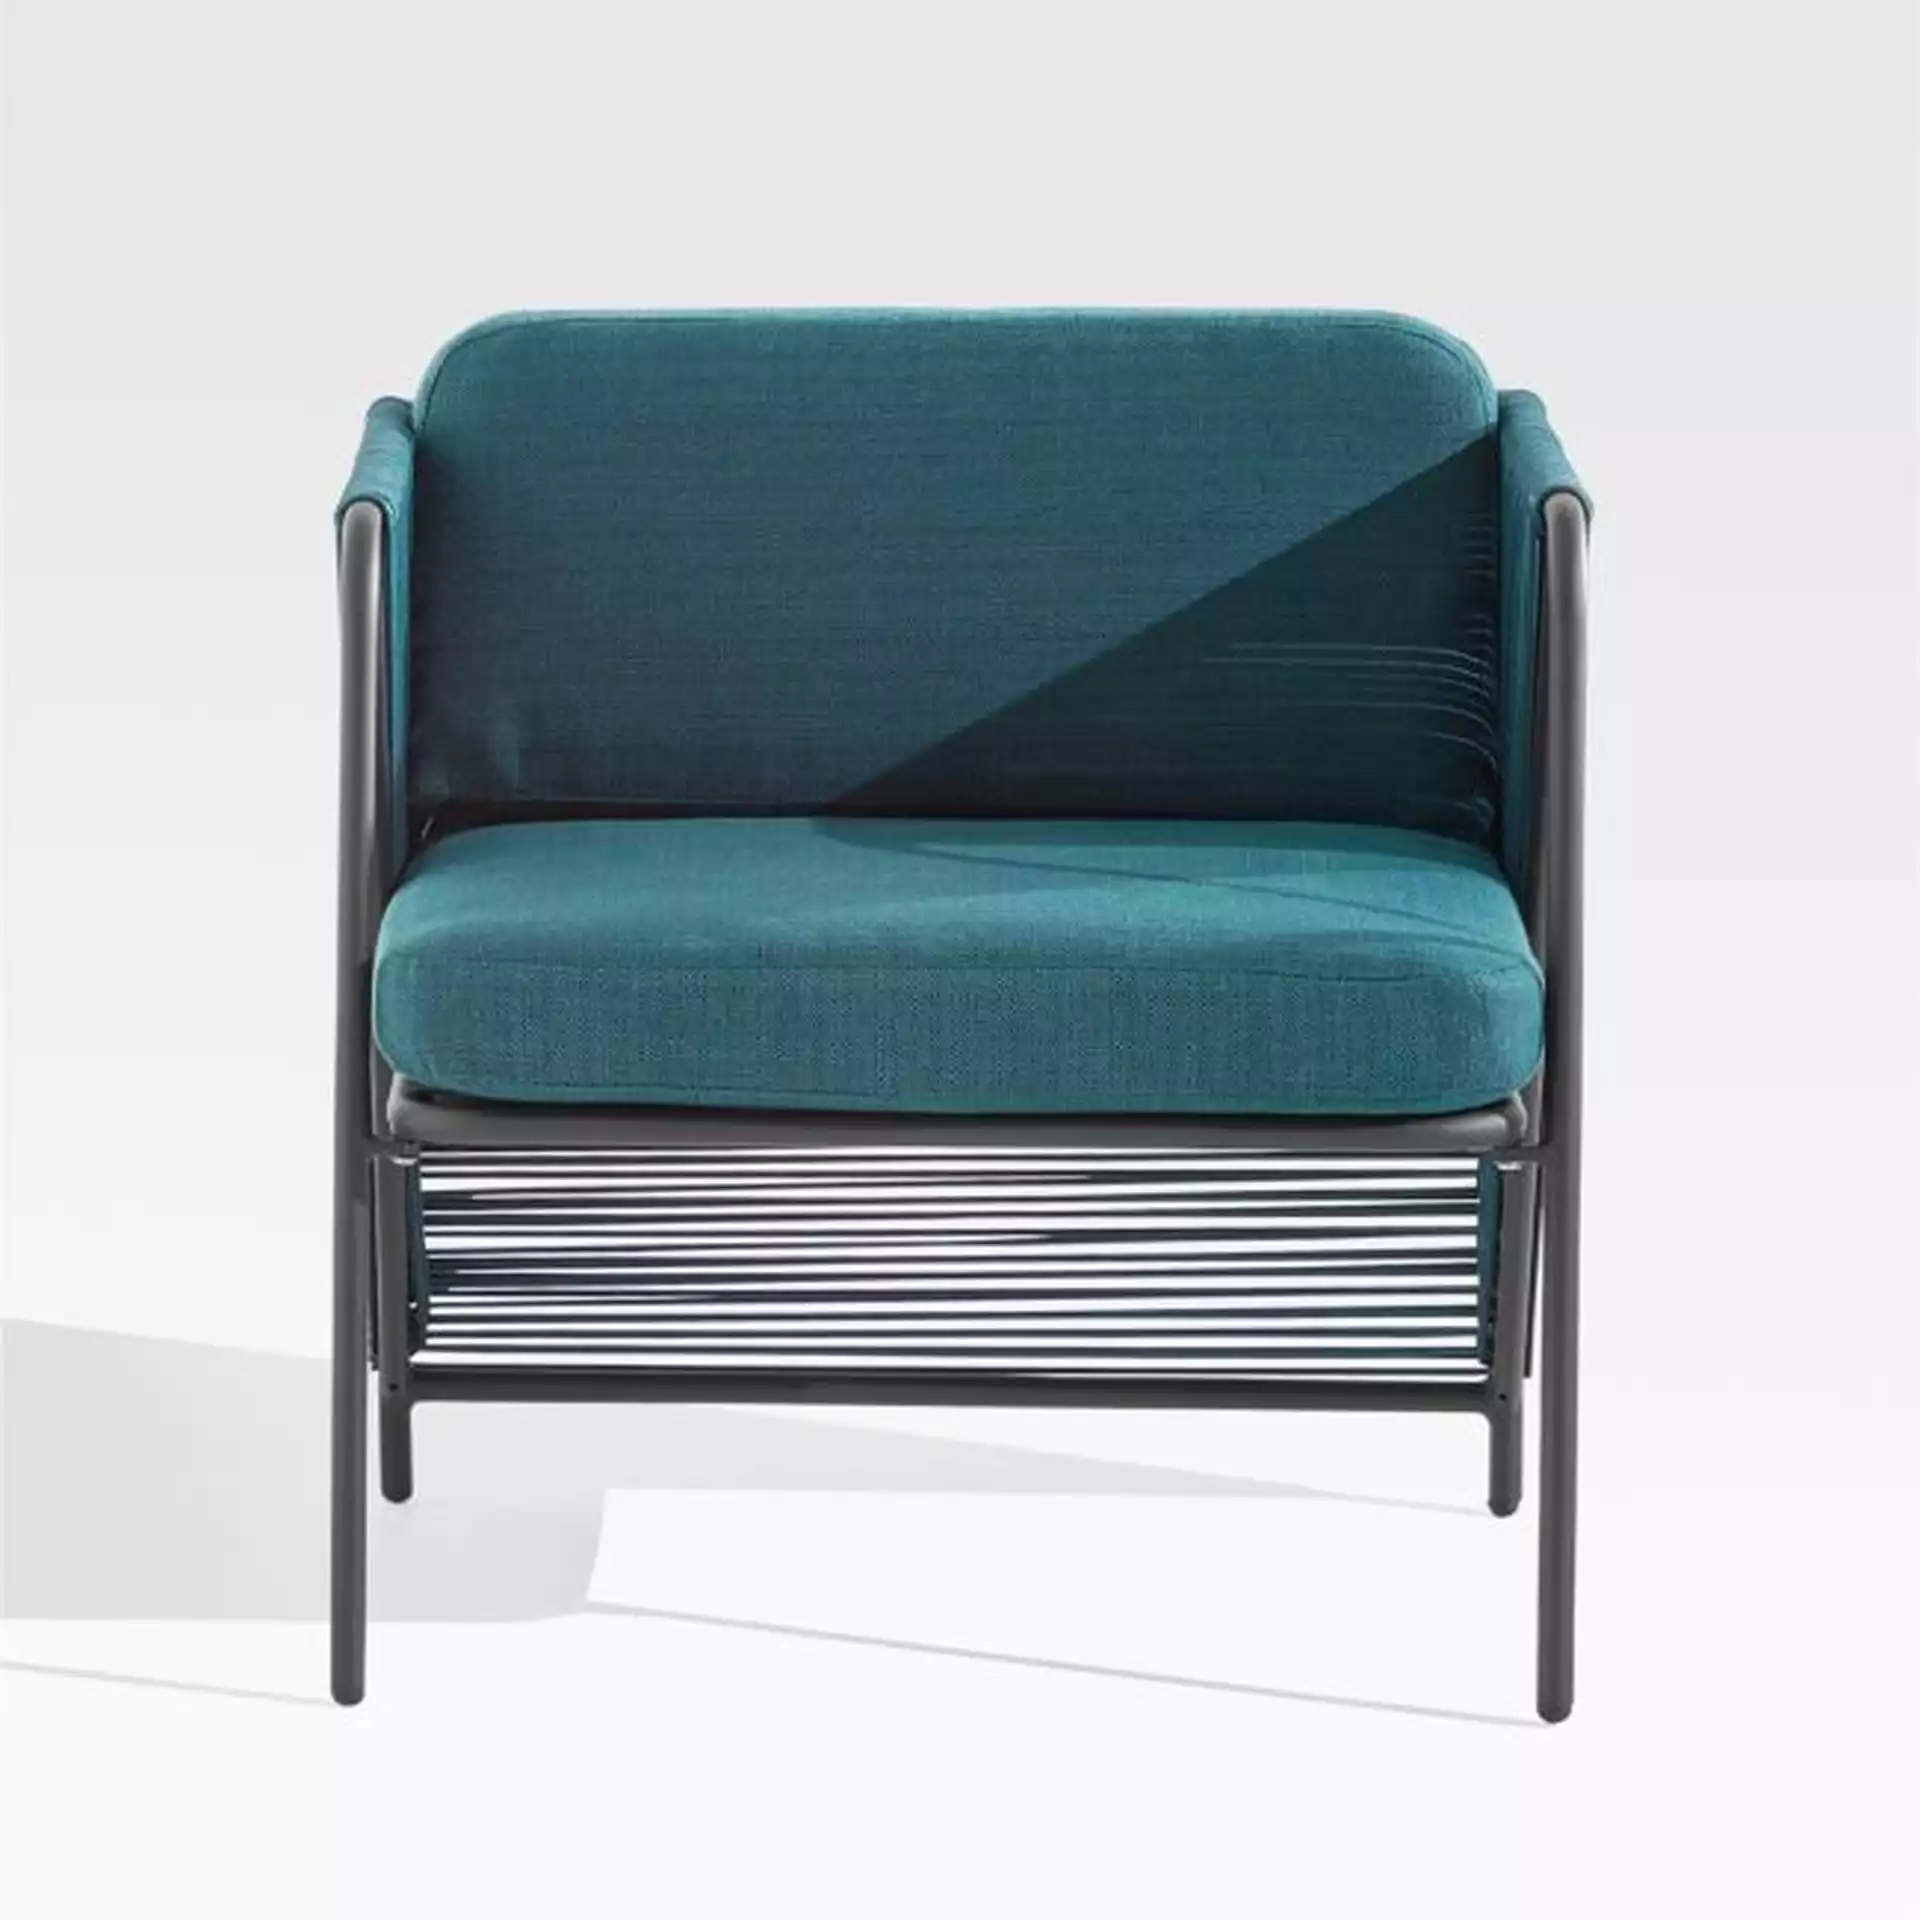 Dorado Teal Small Space Outdoor Lounge Chair